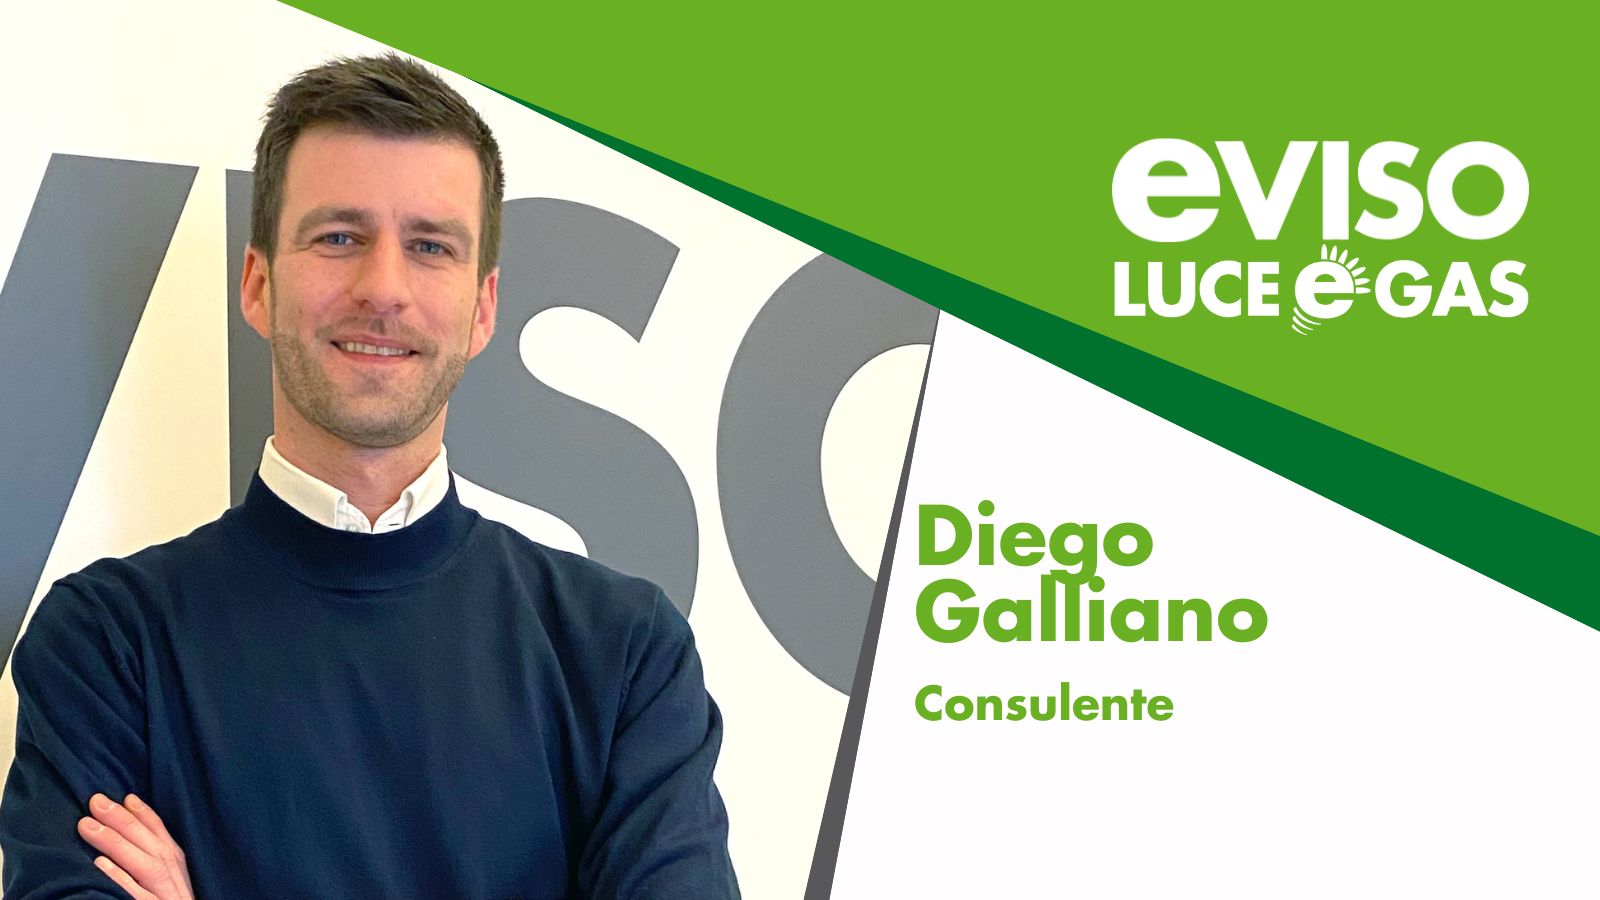 Diego-Galliano-consulente-eVISO